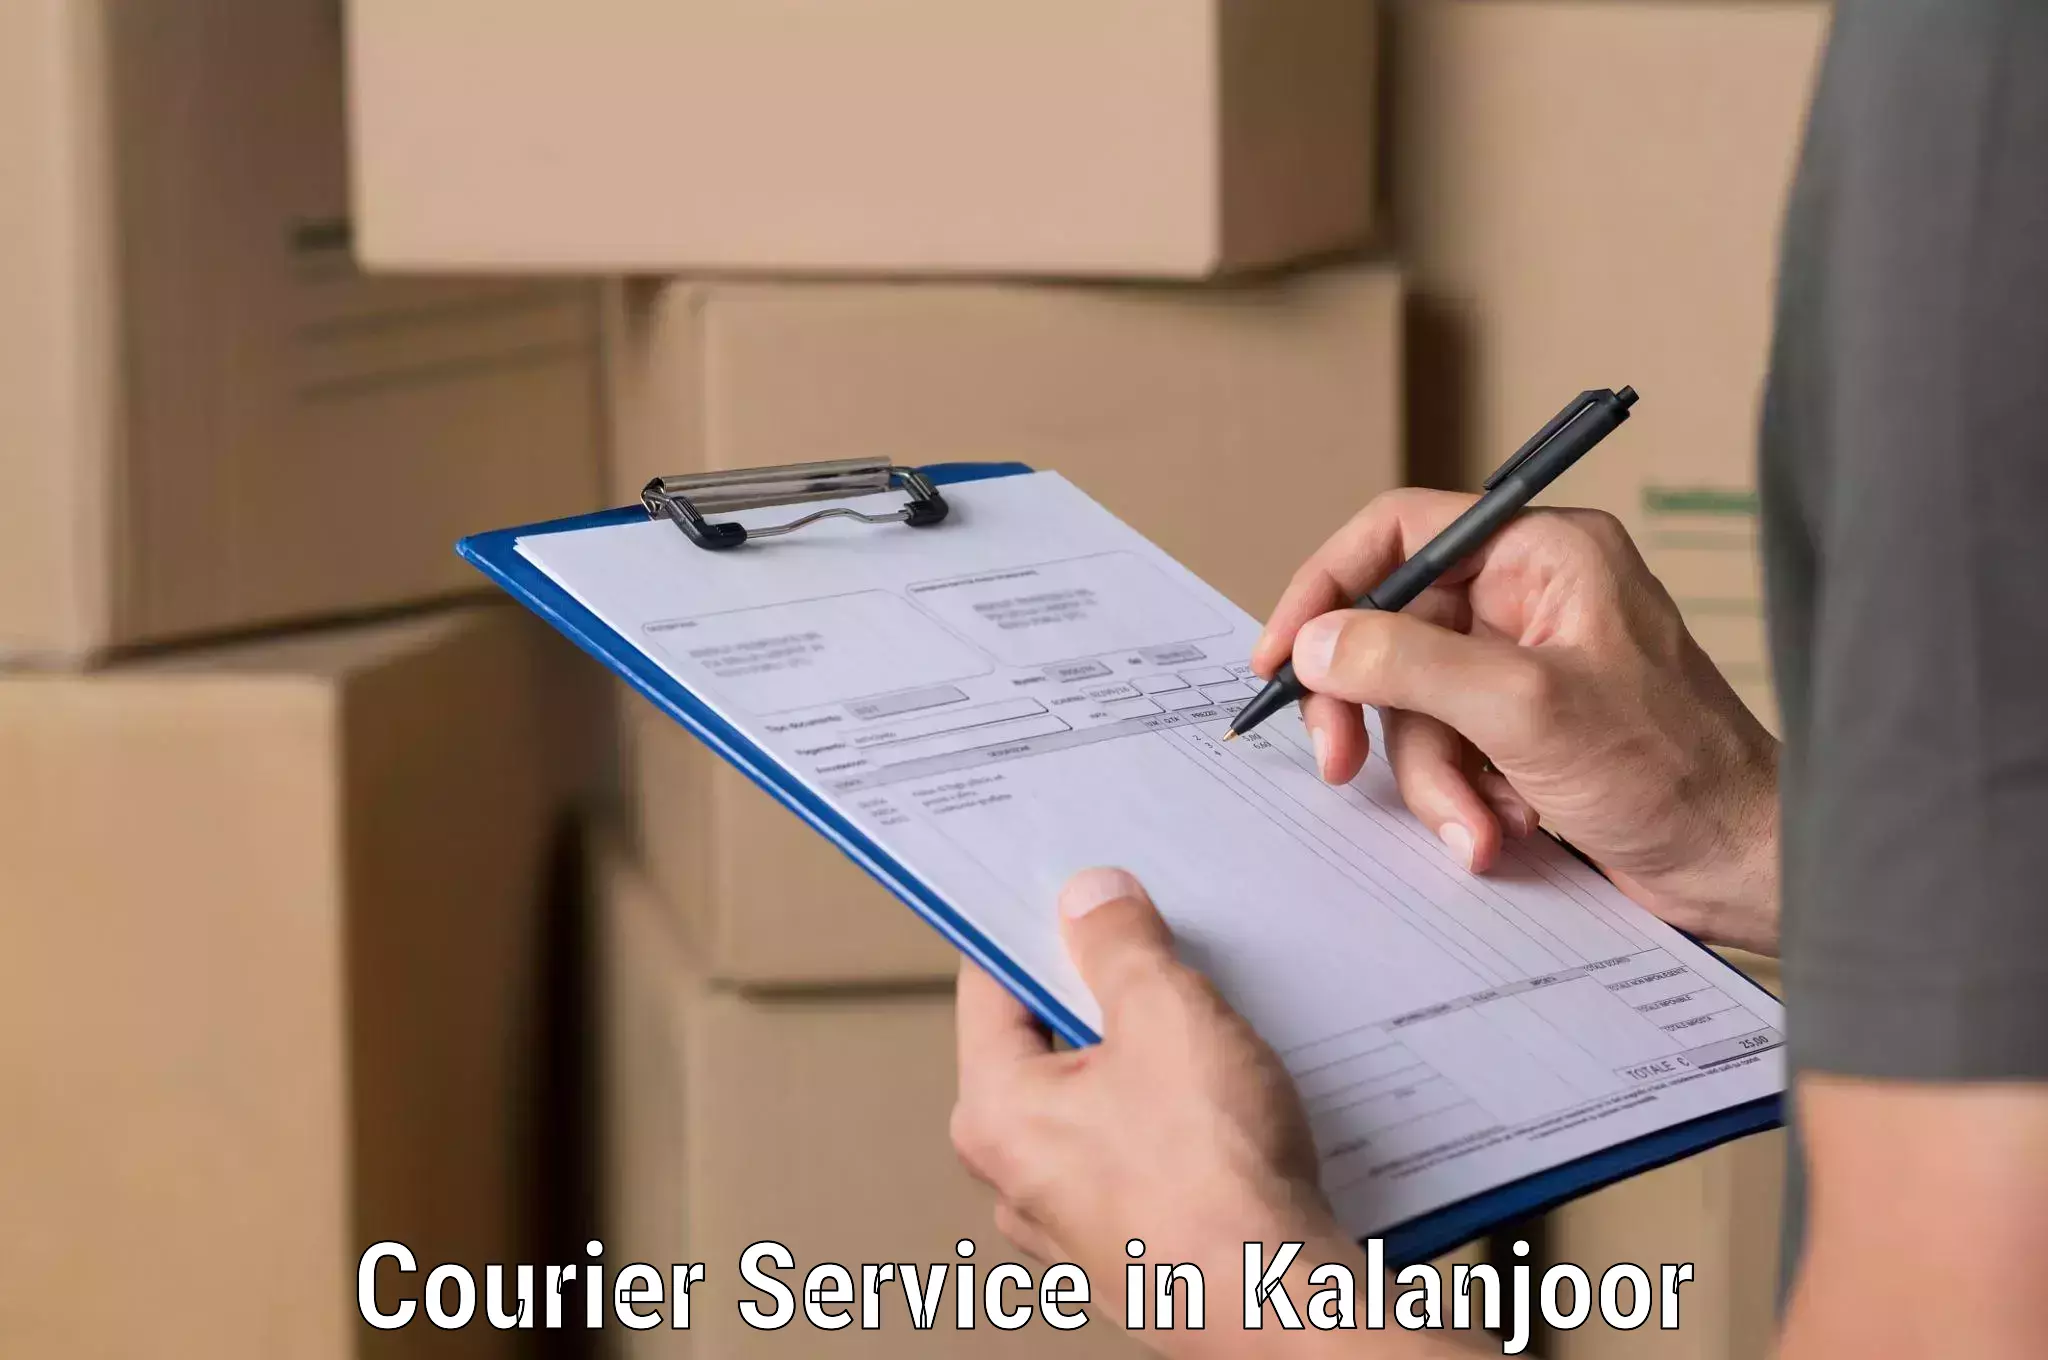 On-demand shipping options in Kalanjoor